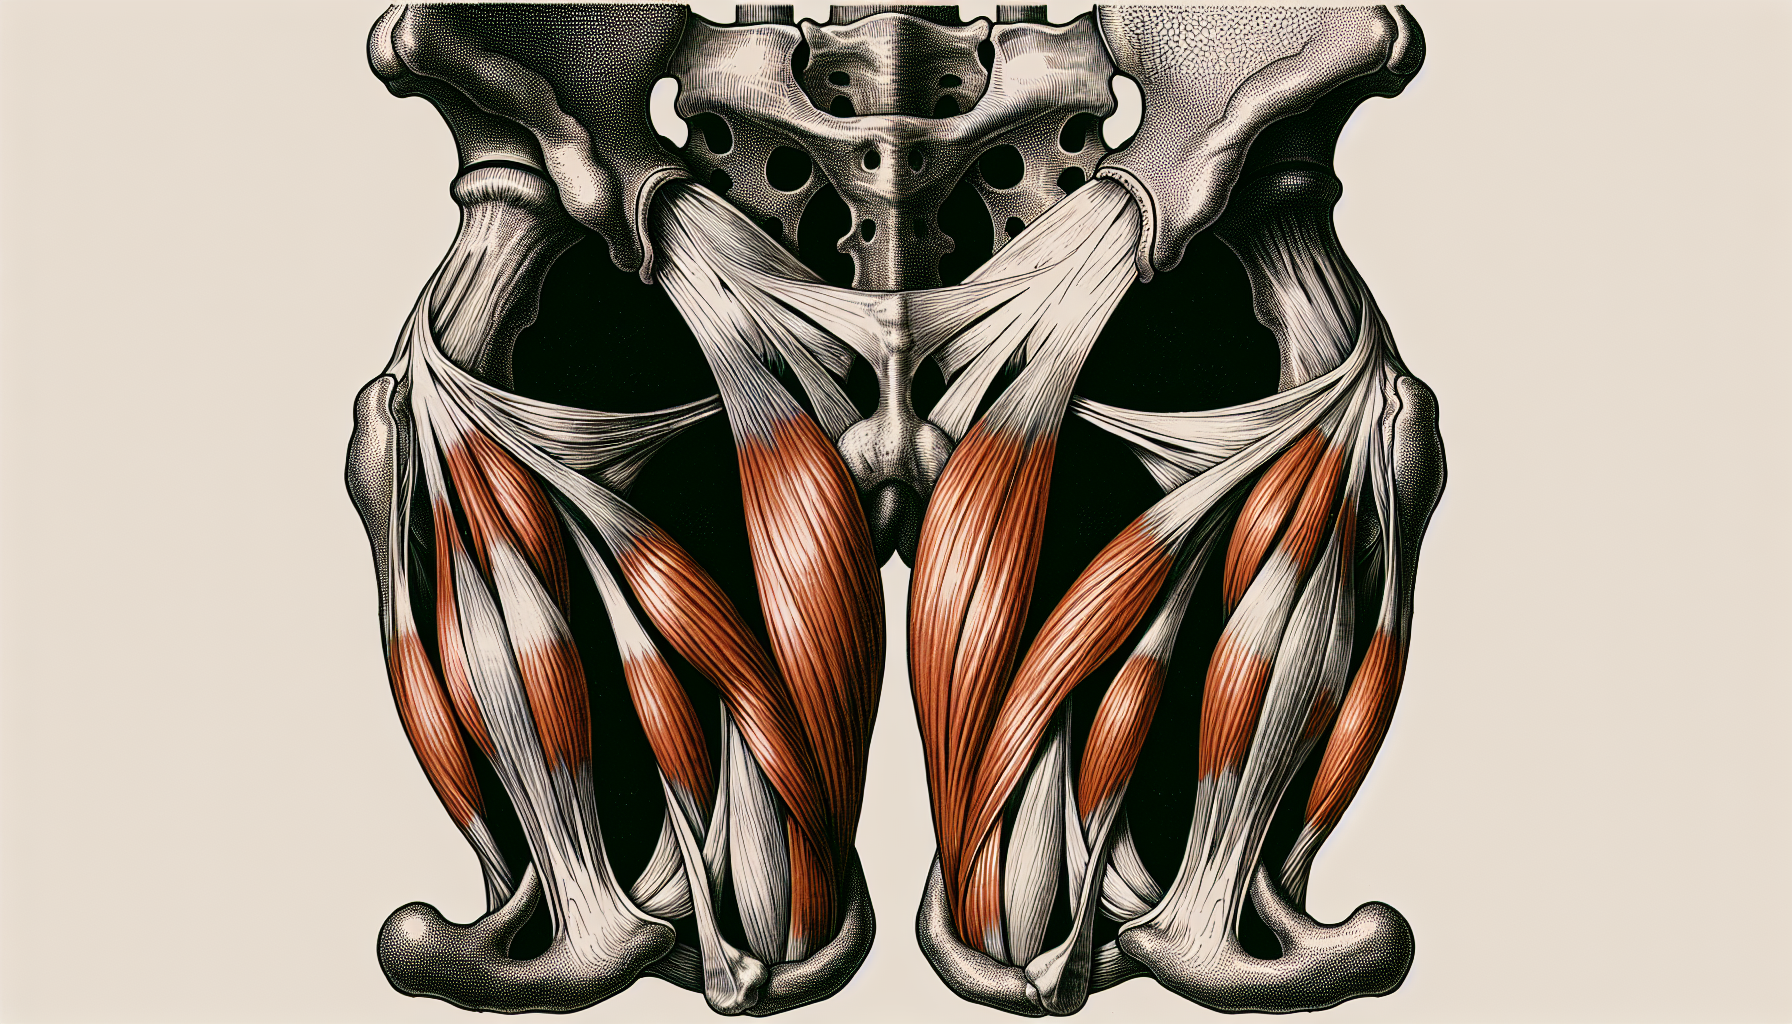 Illustration of biceps femoris muscle anatomy